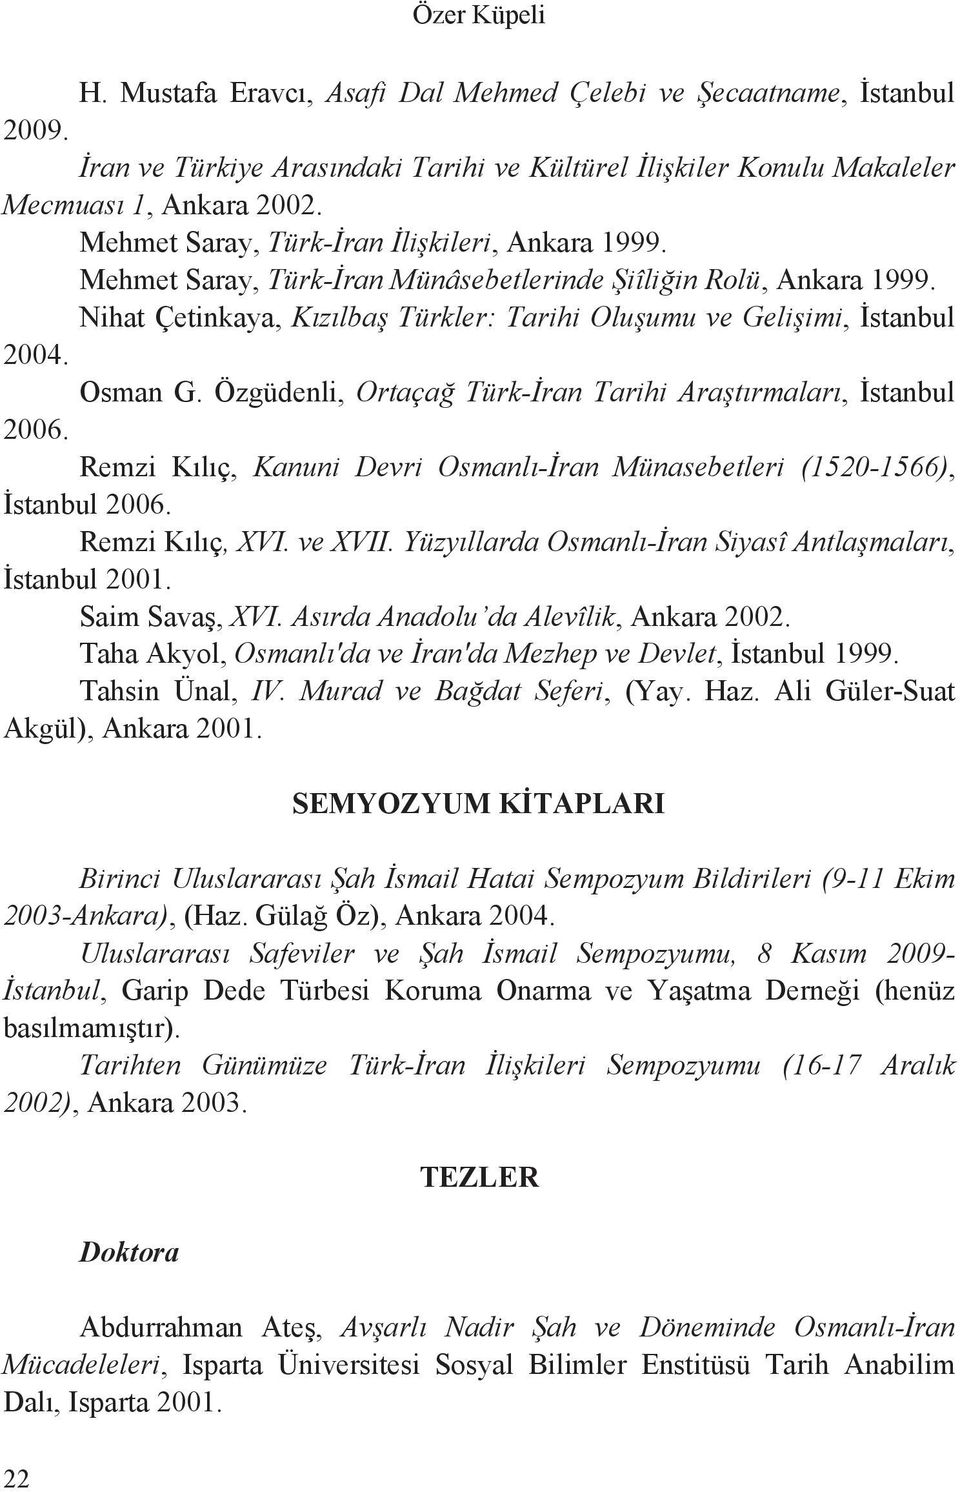 Özgüdenli, Ortaça Türk- ran Tarihi Ara t rmalar, stanbul 2006. Remzi K l ç, Kanuni Devri Osmanl - ran Münasebetleri (1520-1566), stanbul 2006. Remzi K l ç, XVI. ve XVII.